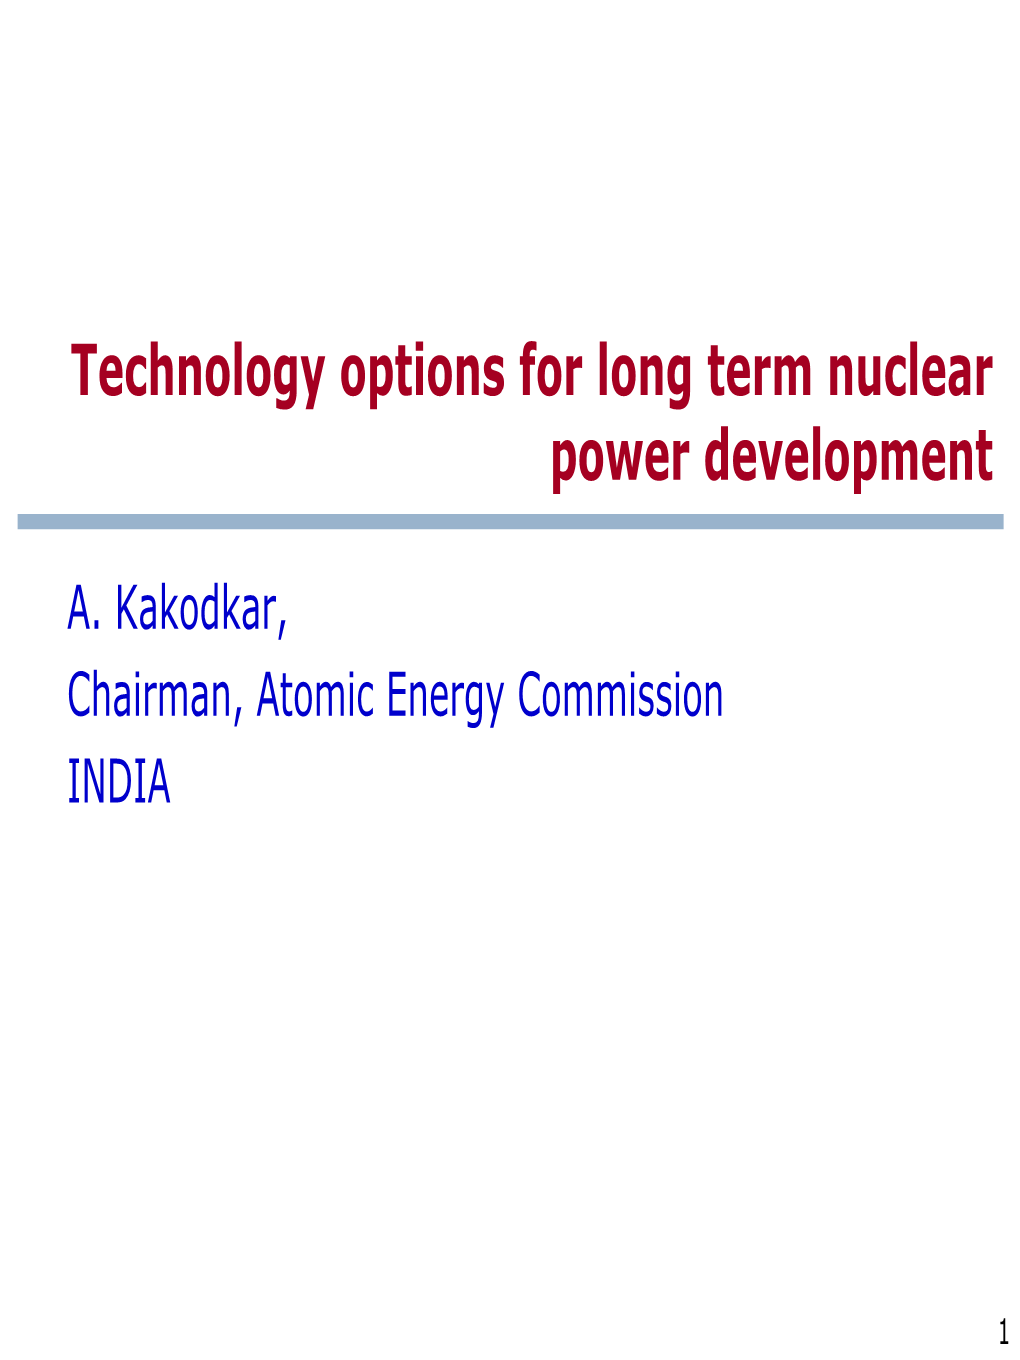 Technology Options for Long Term Nuclear Power Development